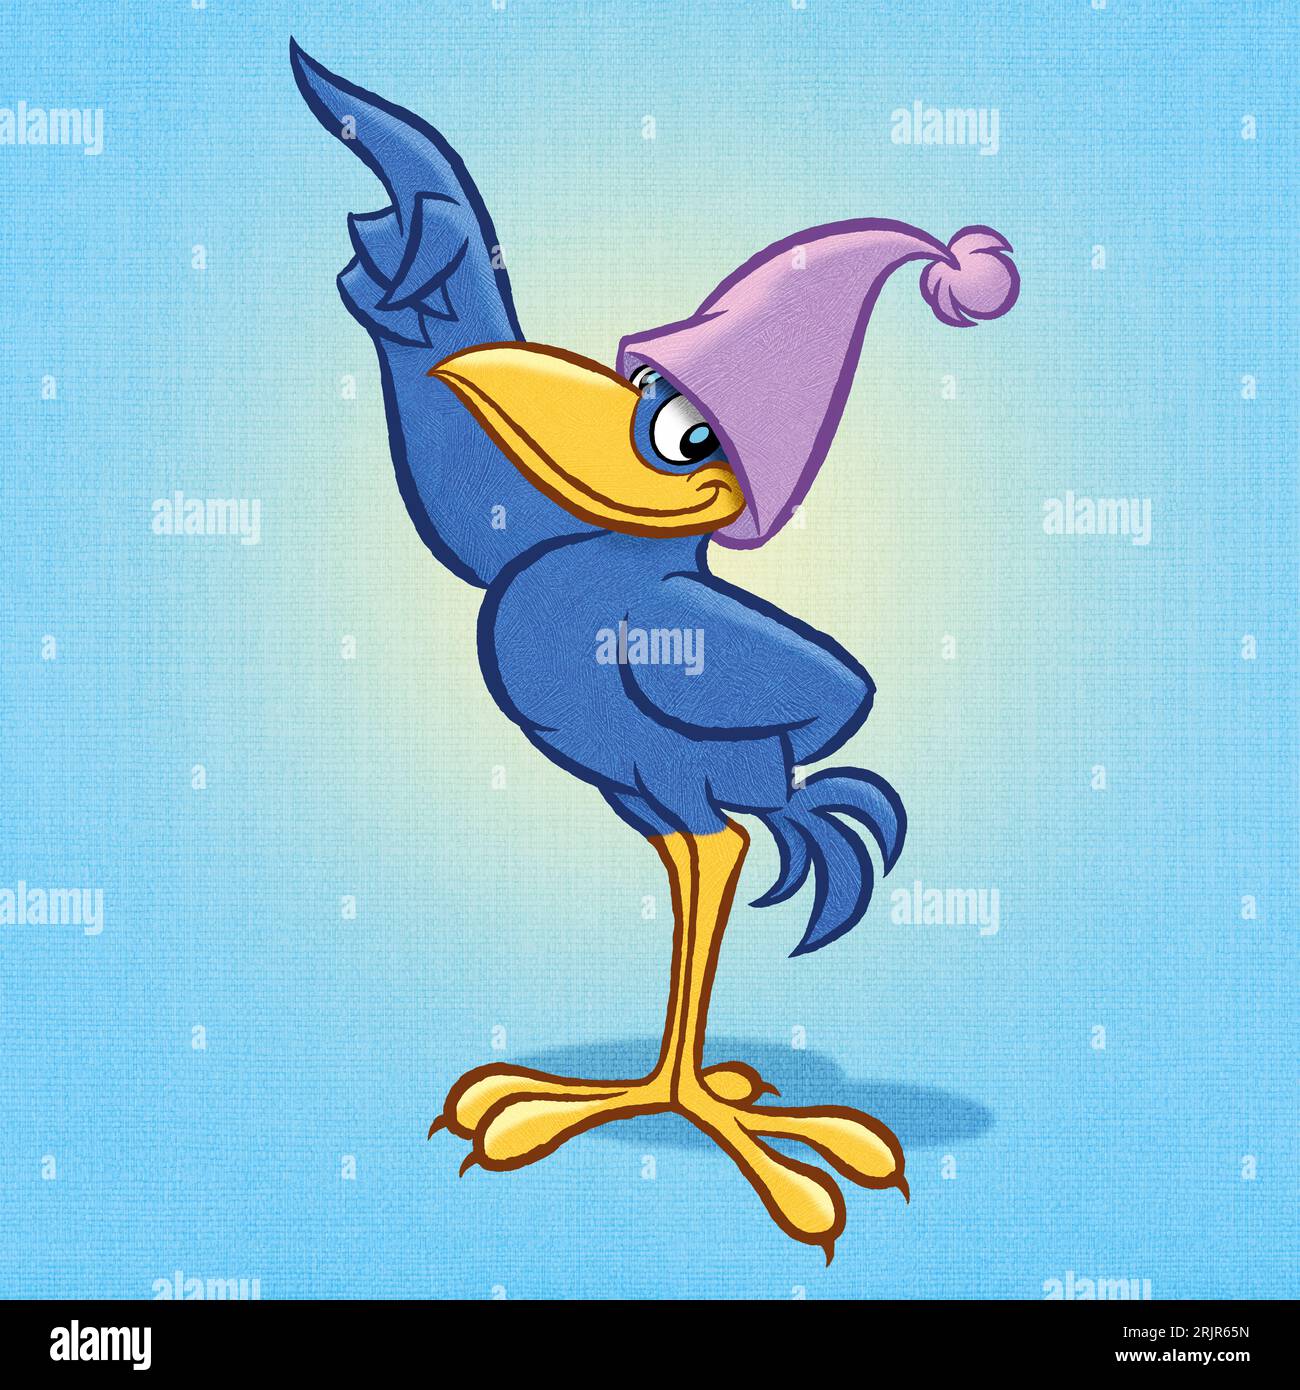 Illustrated Bird Character with Nightcap Stock Photo